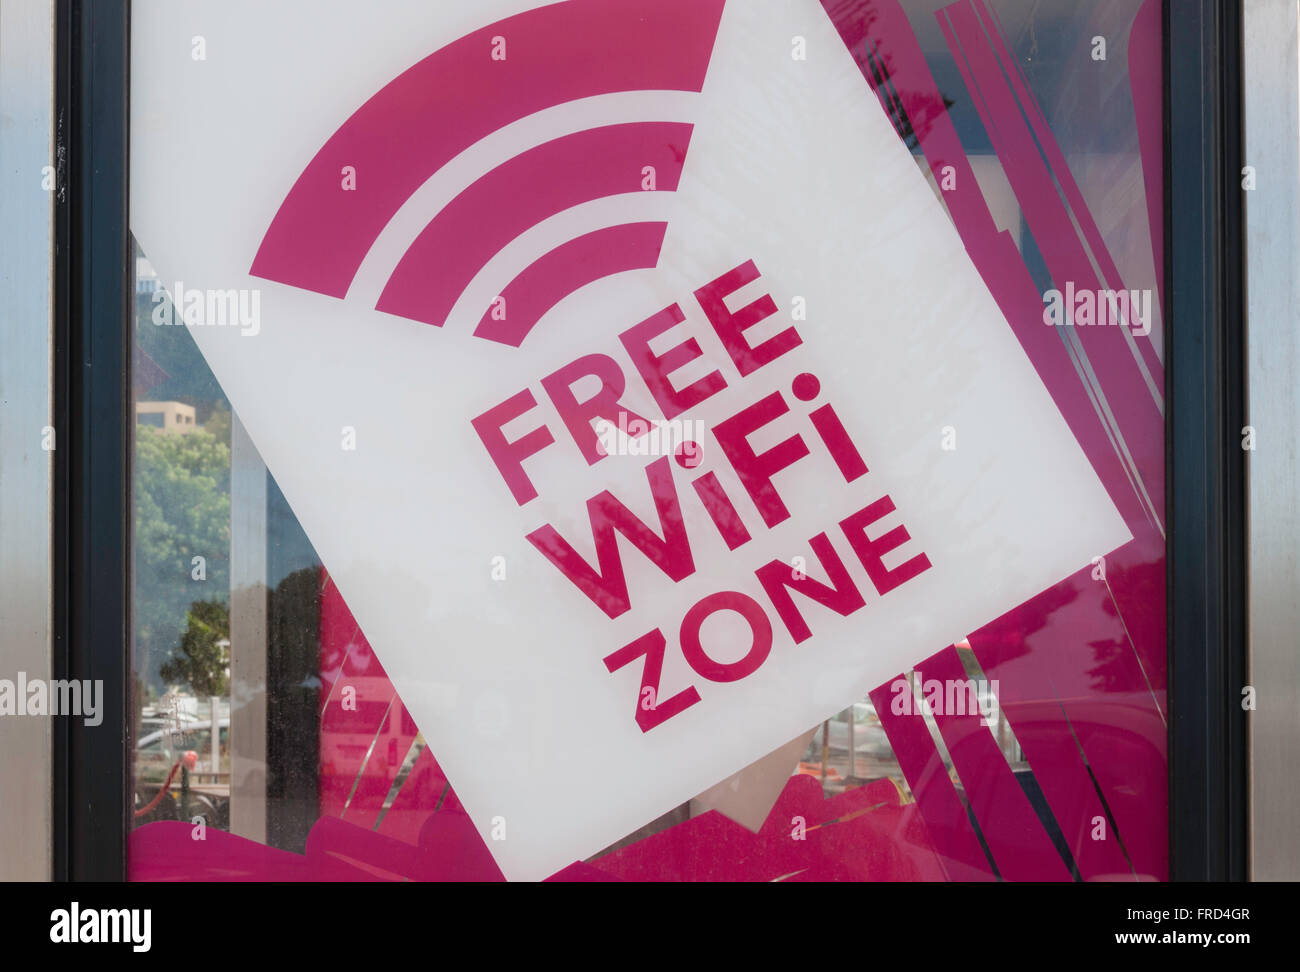 Kostenlose WiFi-Zone anmelden Telefon Kiosk, Esplanade, Sumner, Christchurch, Region Canterbury, Südinsel, Neuseeland Stockfoto